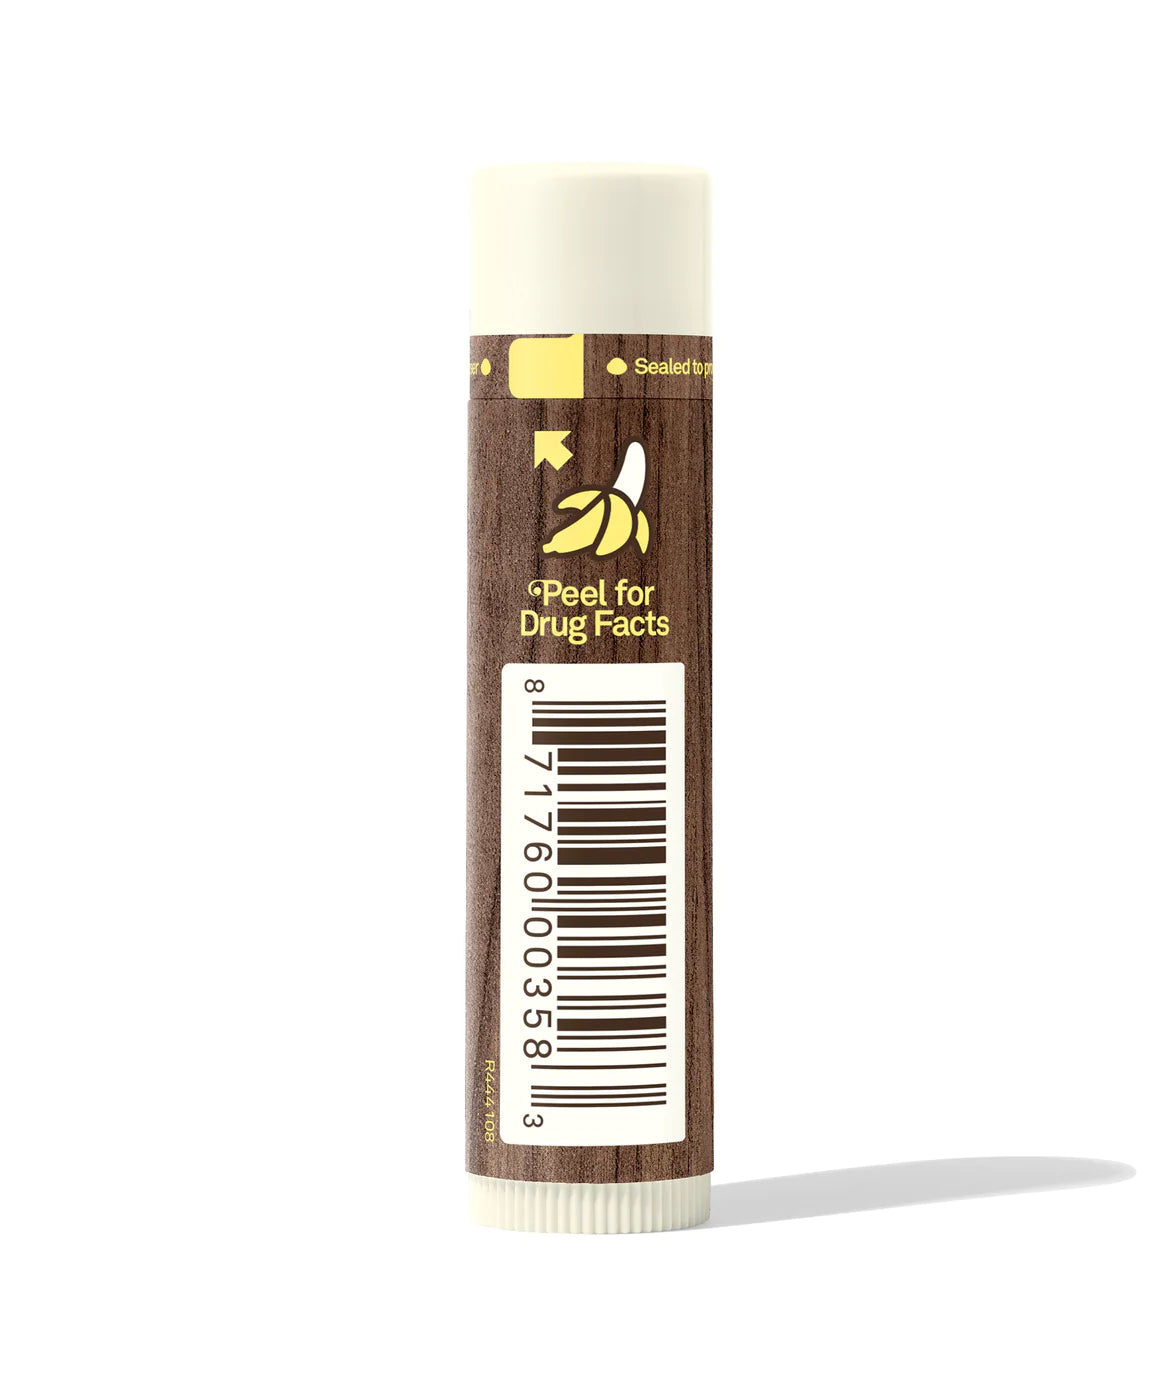 Sunbum - Original SPF 30 Sunscreen Lip Balm - Coconut